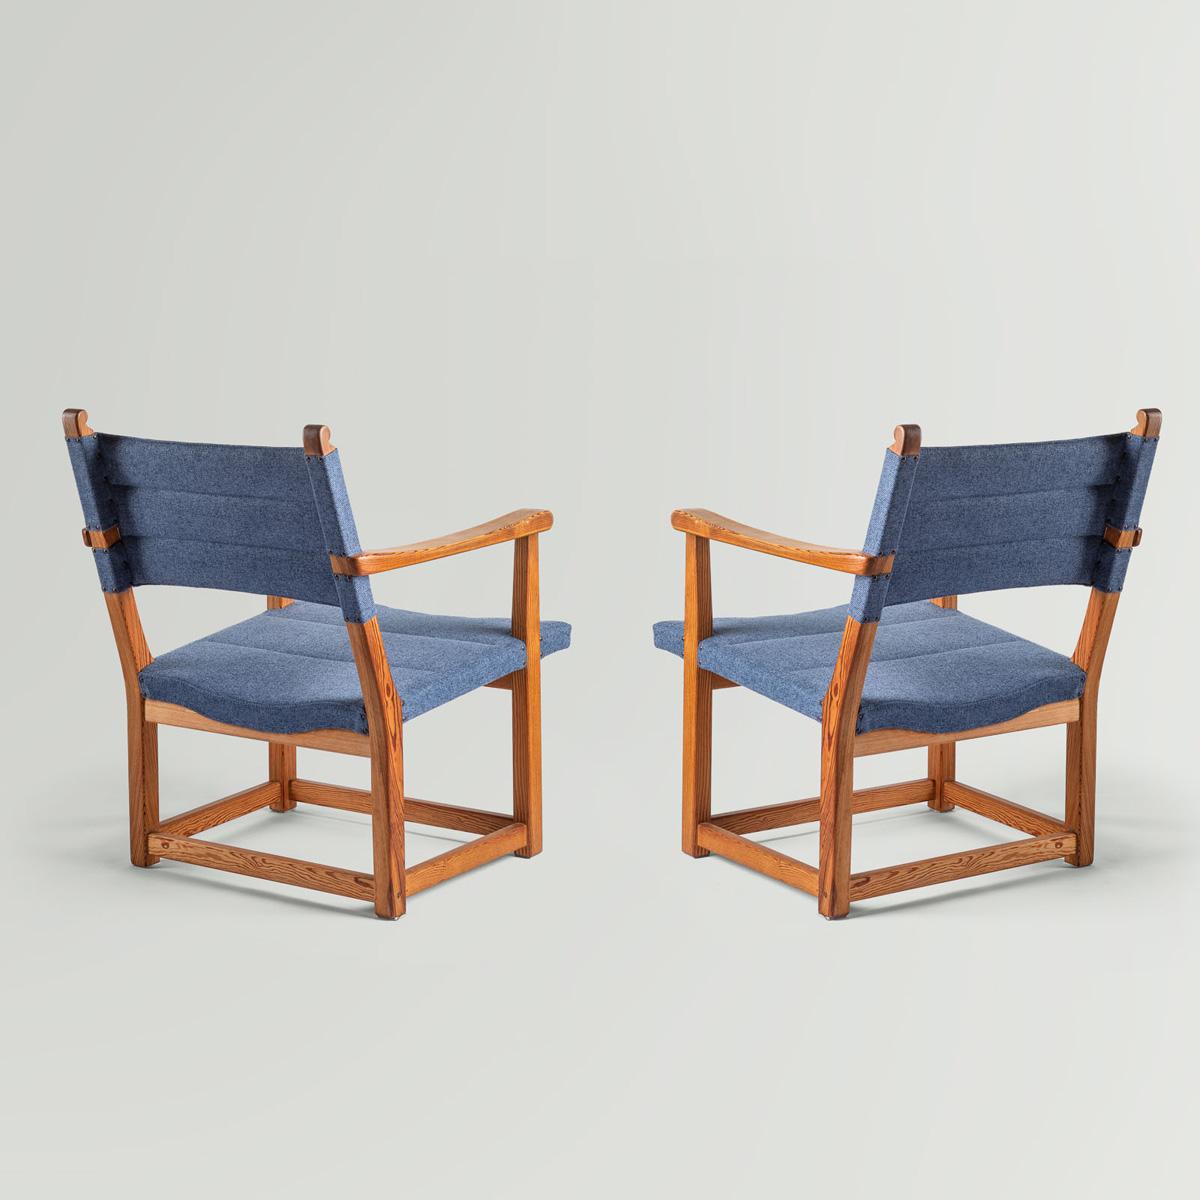 Scandinavian Modern Carl Malmsten Pair of “Hängsits” Armchairs in Solid Pine, 1947 For Sale